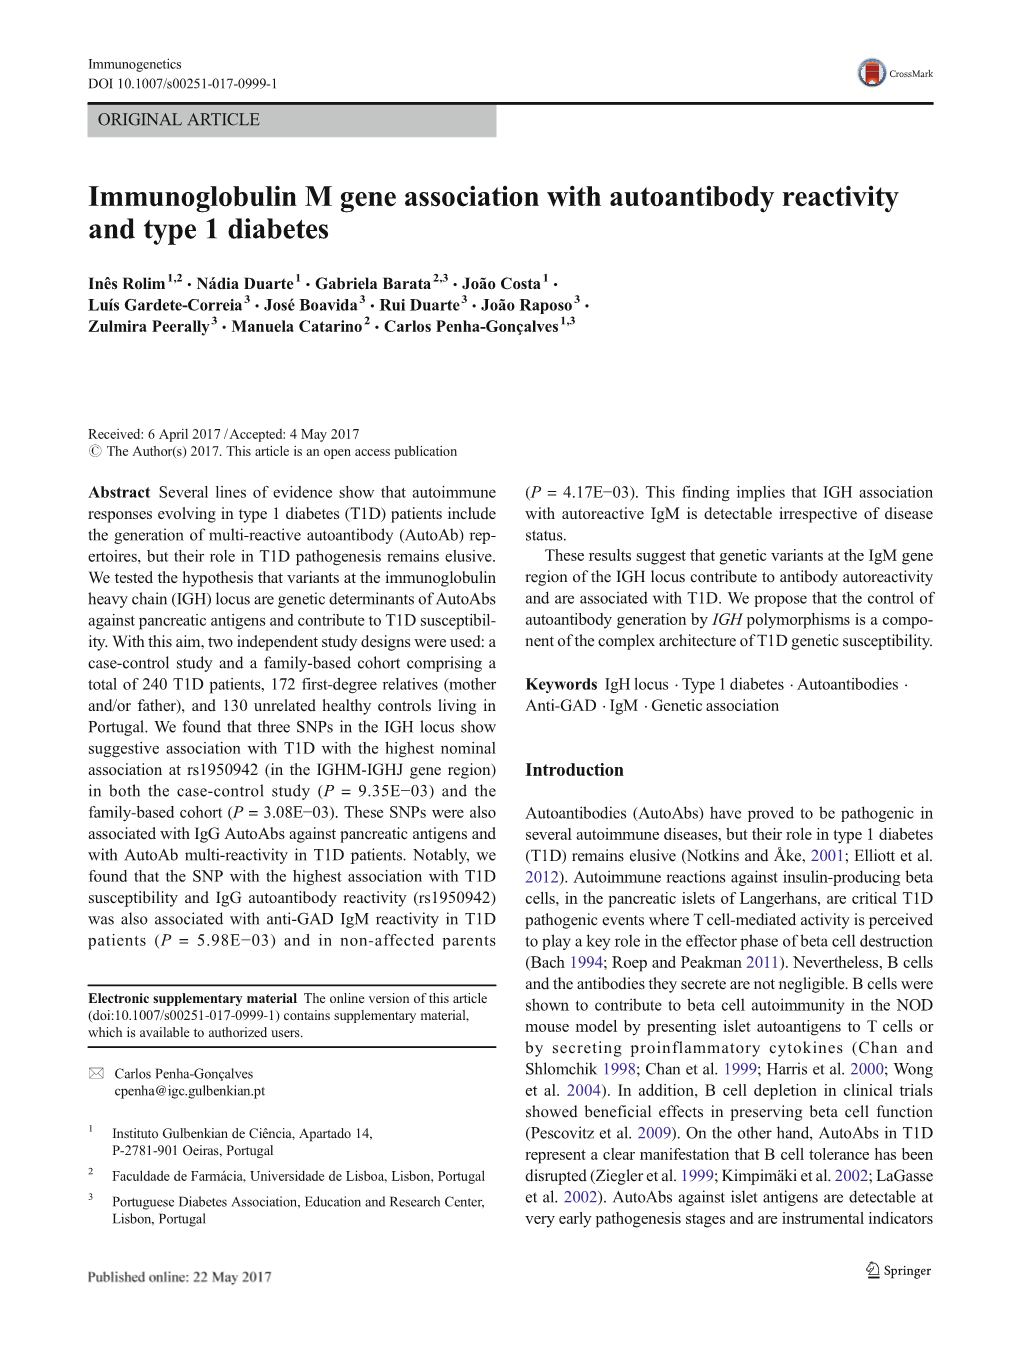 Immunoglobulin M Gene Association with Autoantibody Reactivity and Type 1 Diabetes